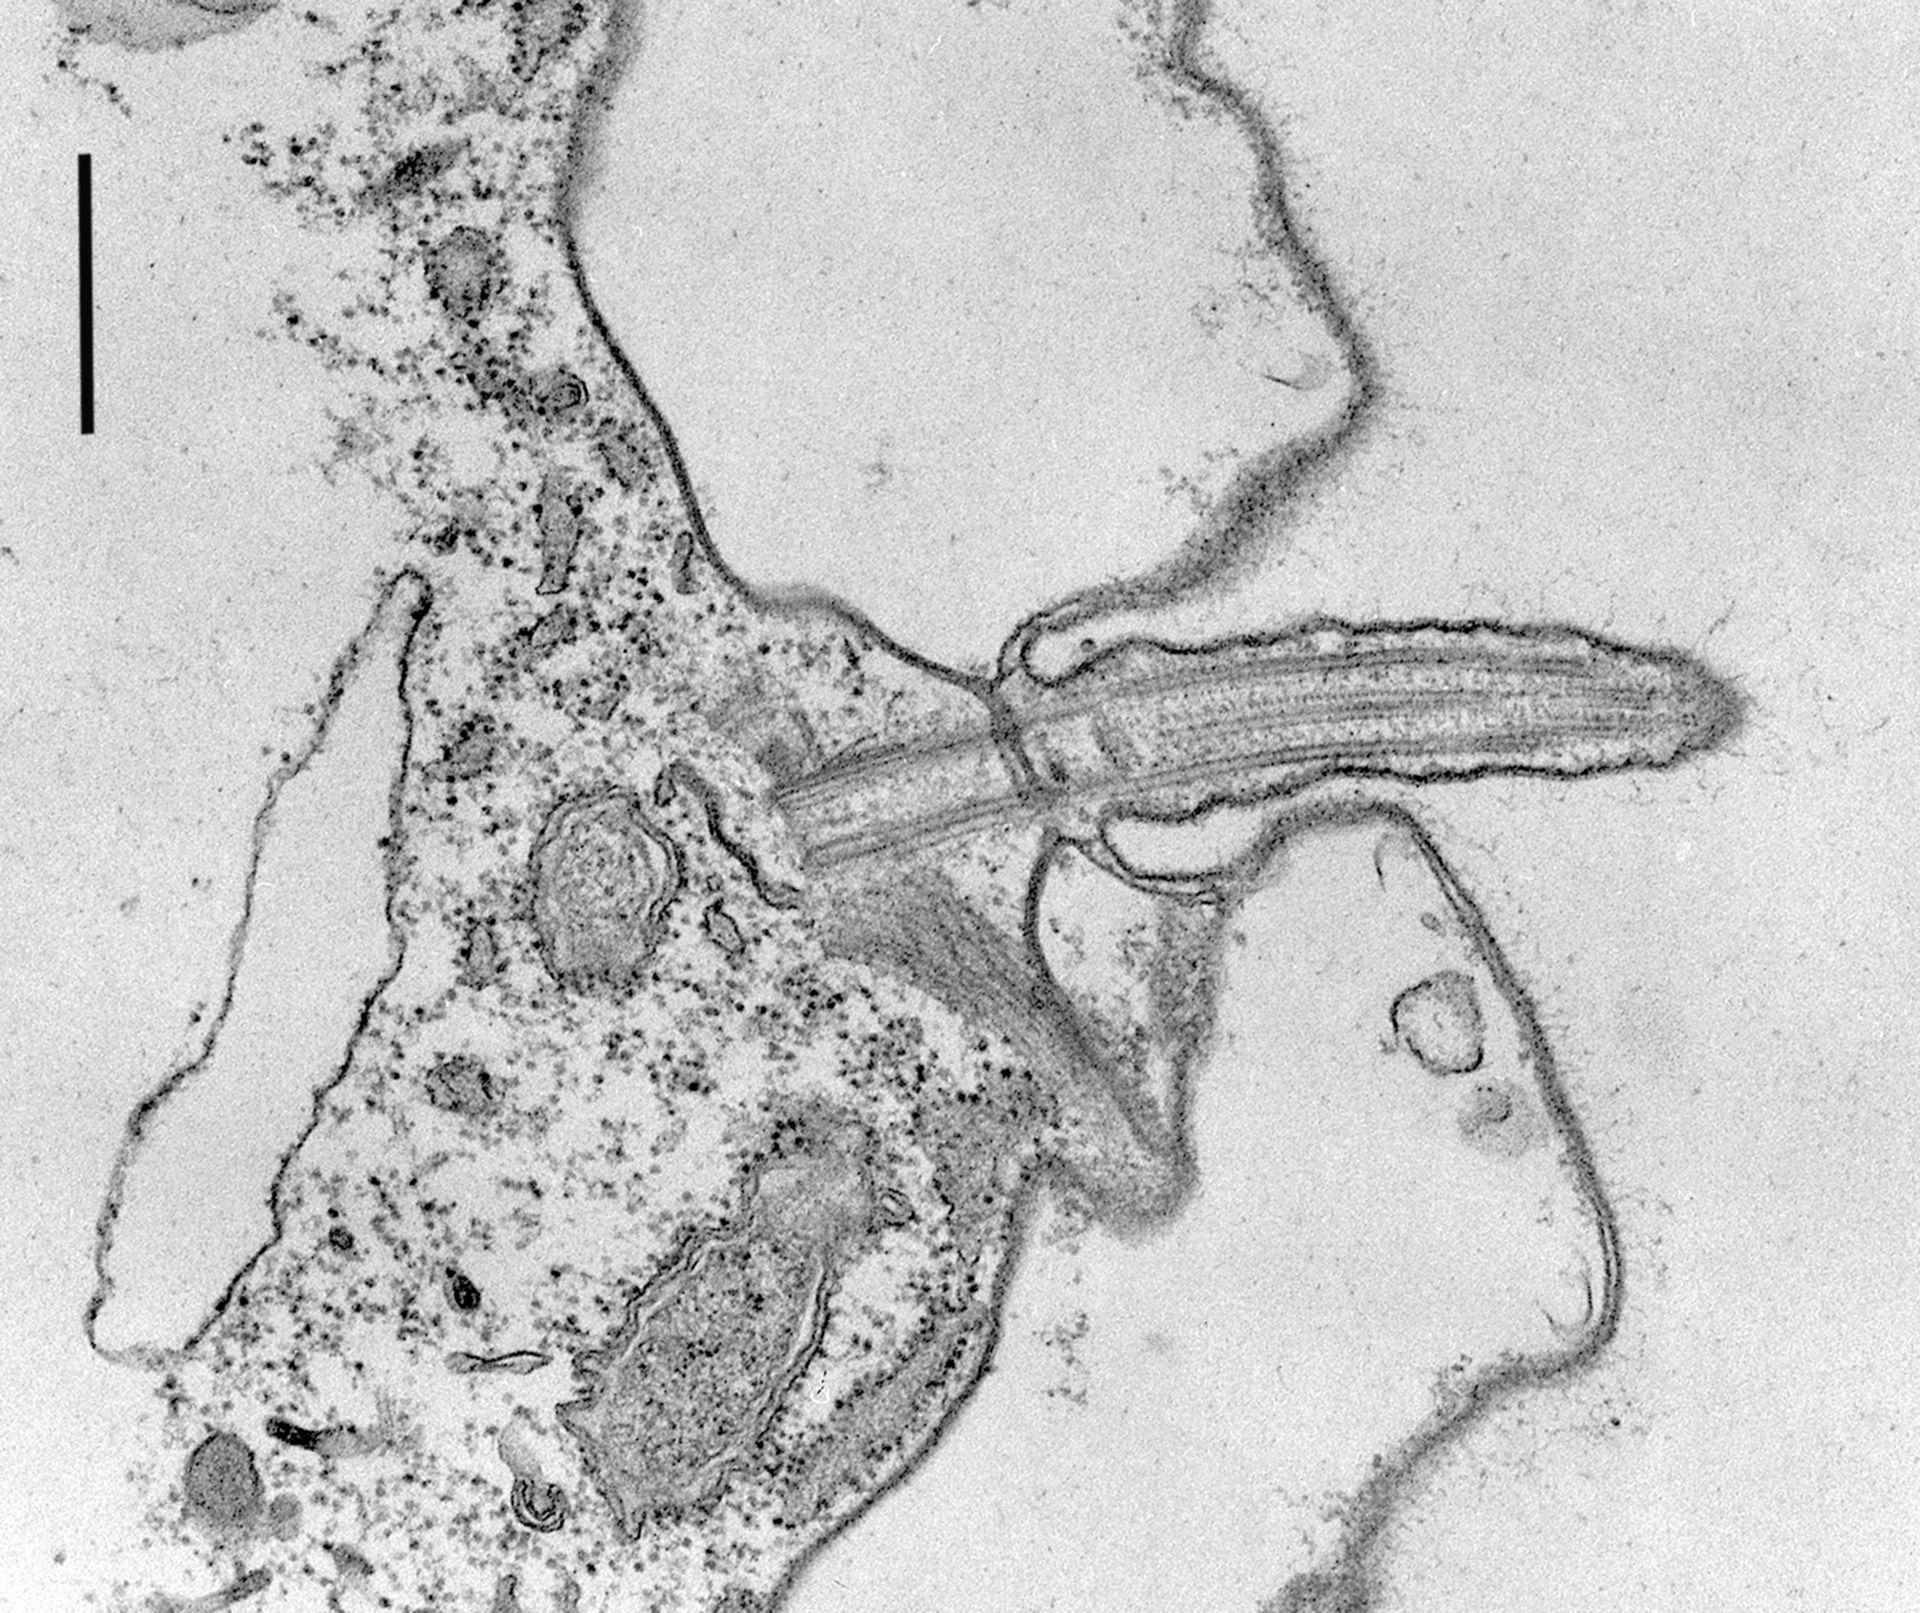 Coleps hirtus (Bacteroid-containing symbiosome) - CIL:9718